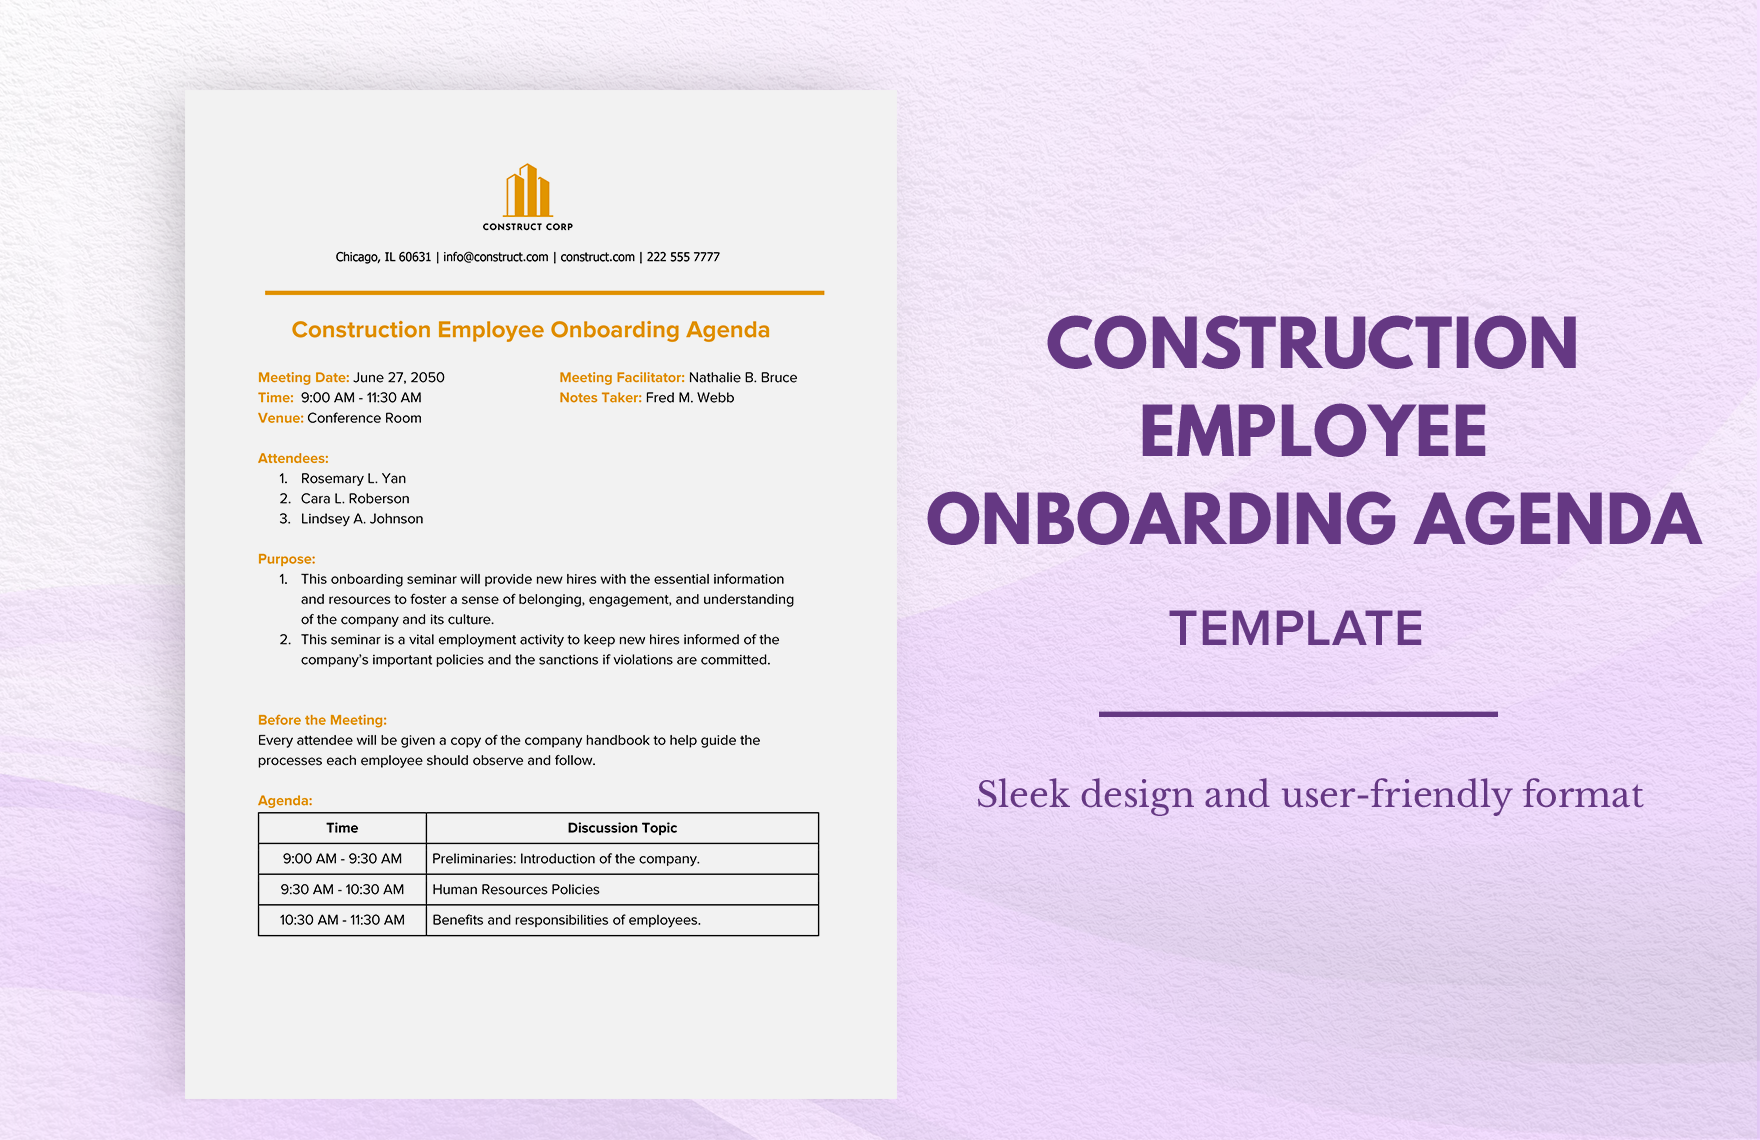 Construction Employee Onboarding Agenda Template